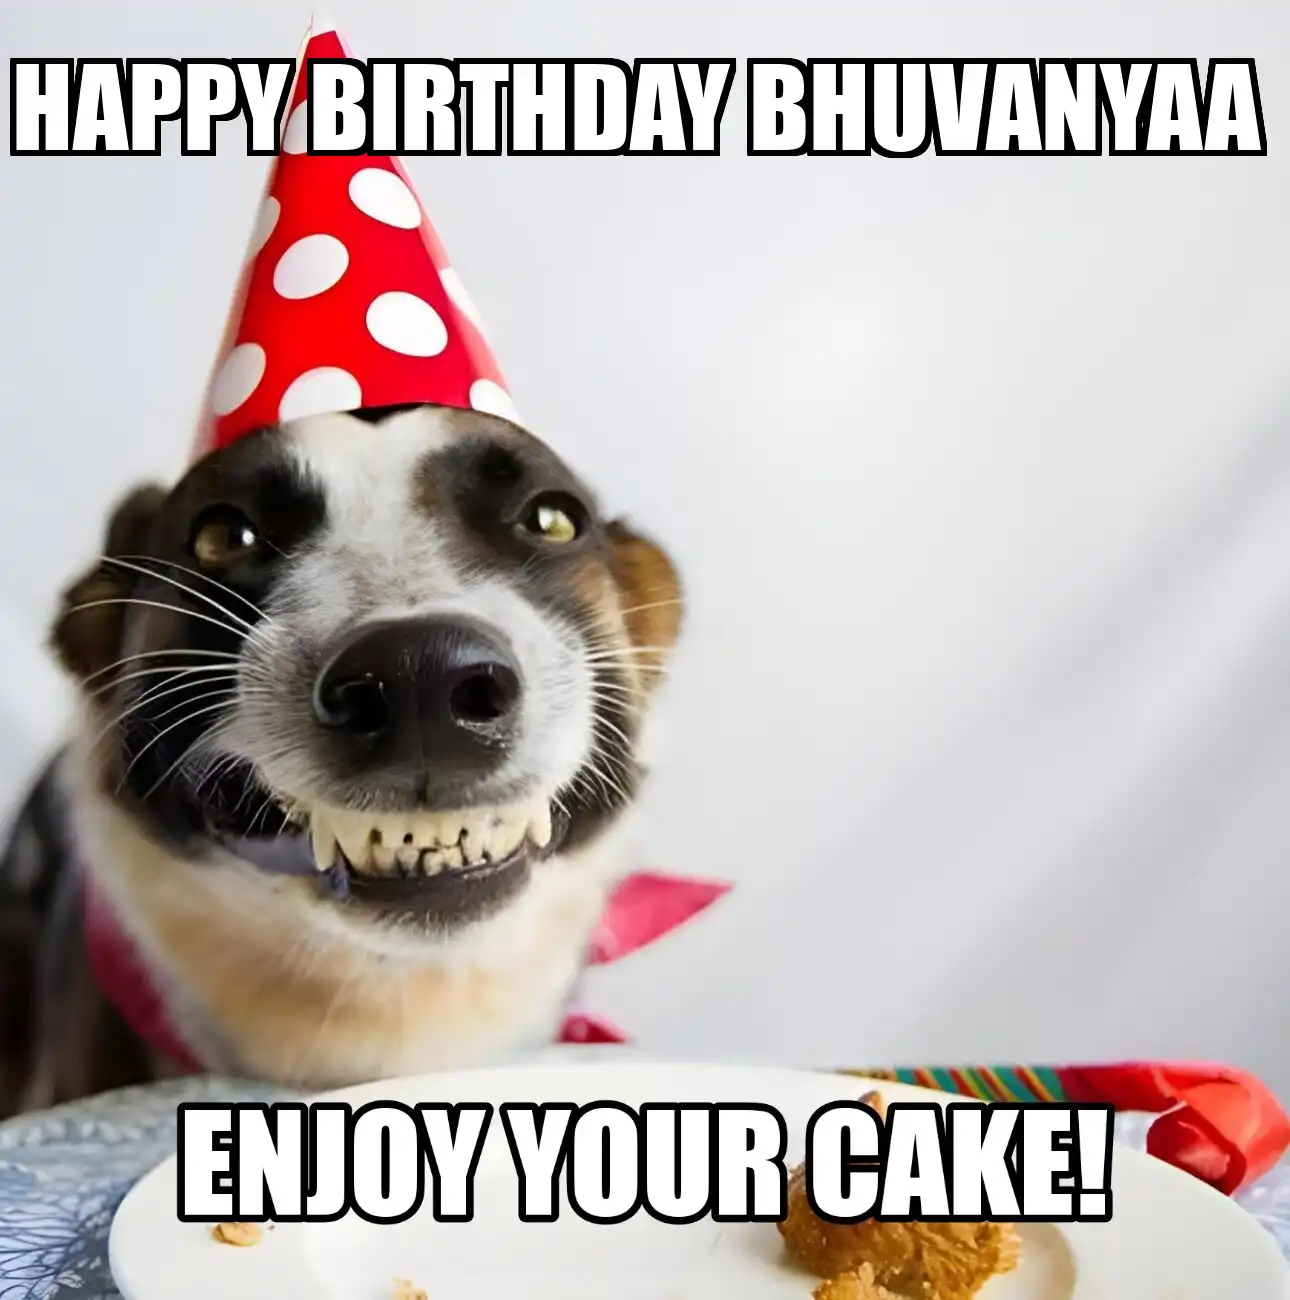 Happy Birthday Bhuvanyaa Enjoy Your Cake Dog Meme